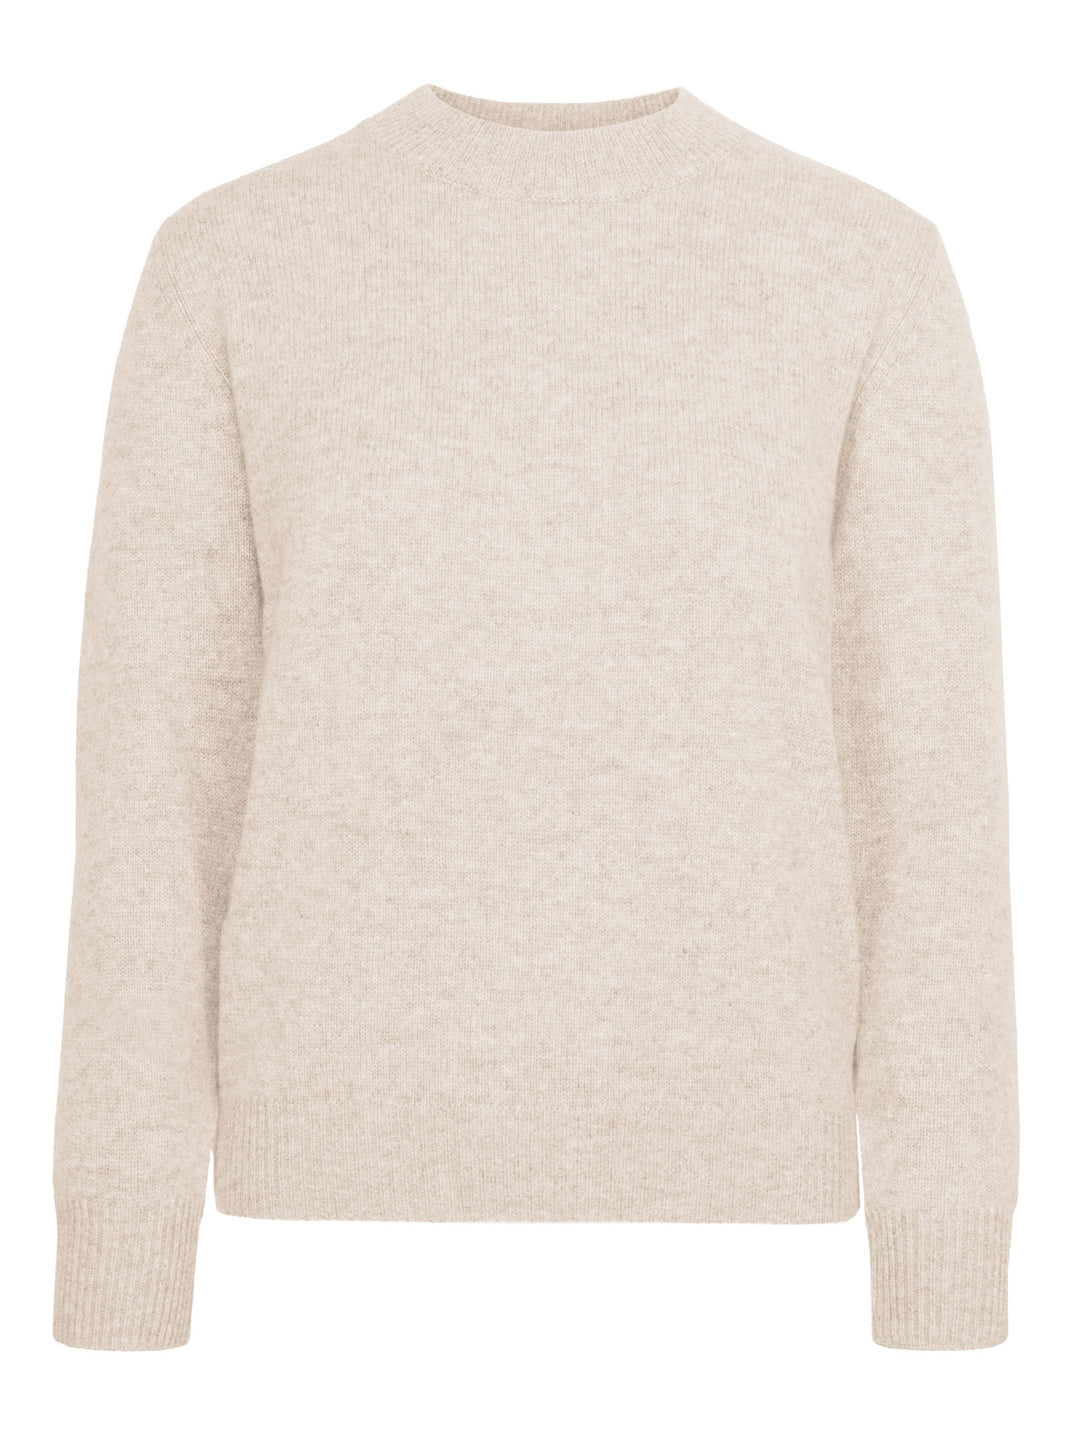 Cashmere sweater Sofia Long beige 100% pure cashmere